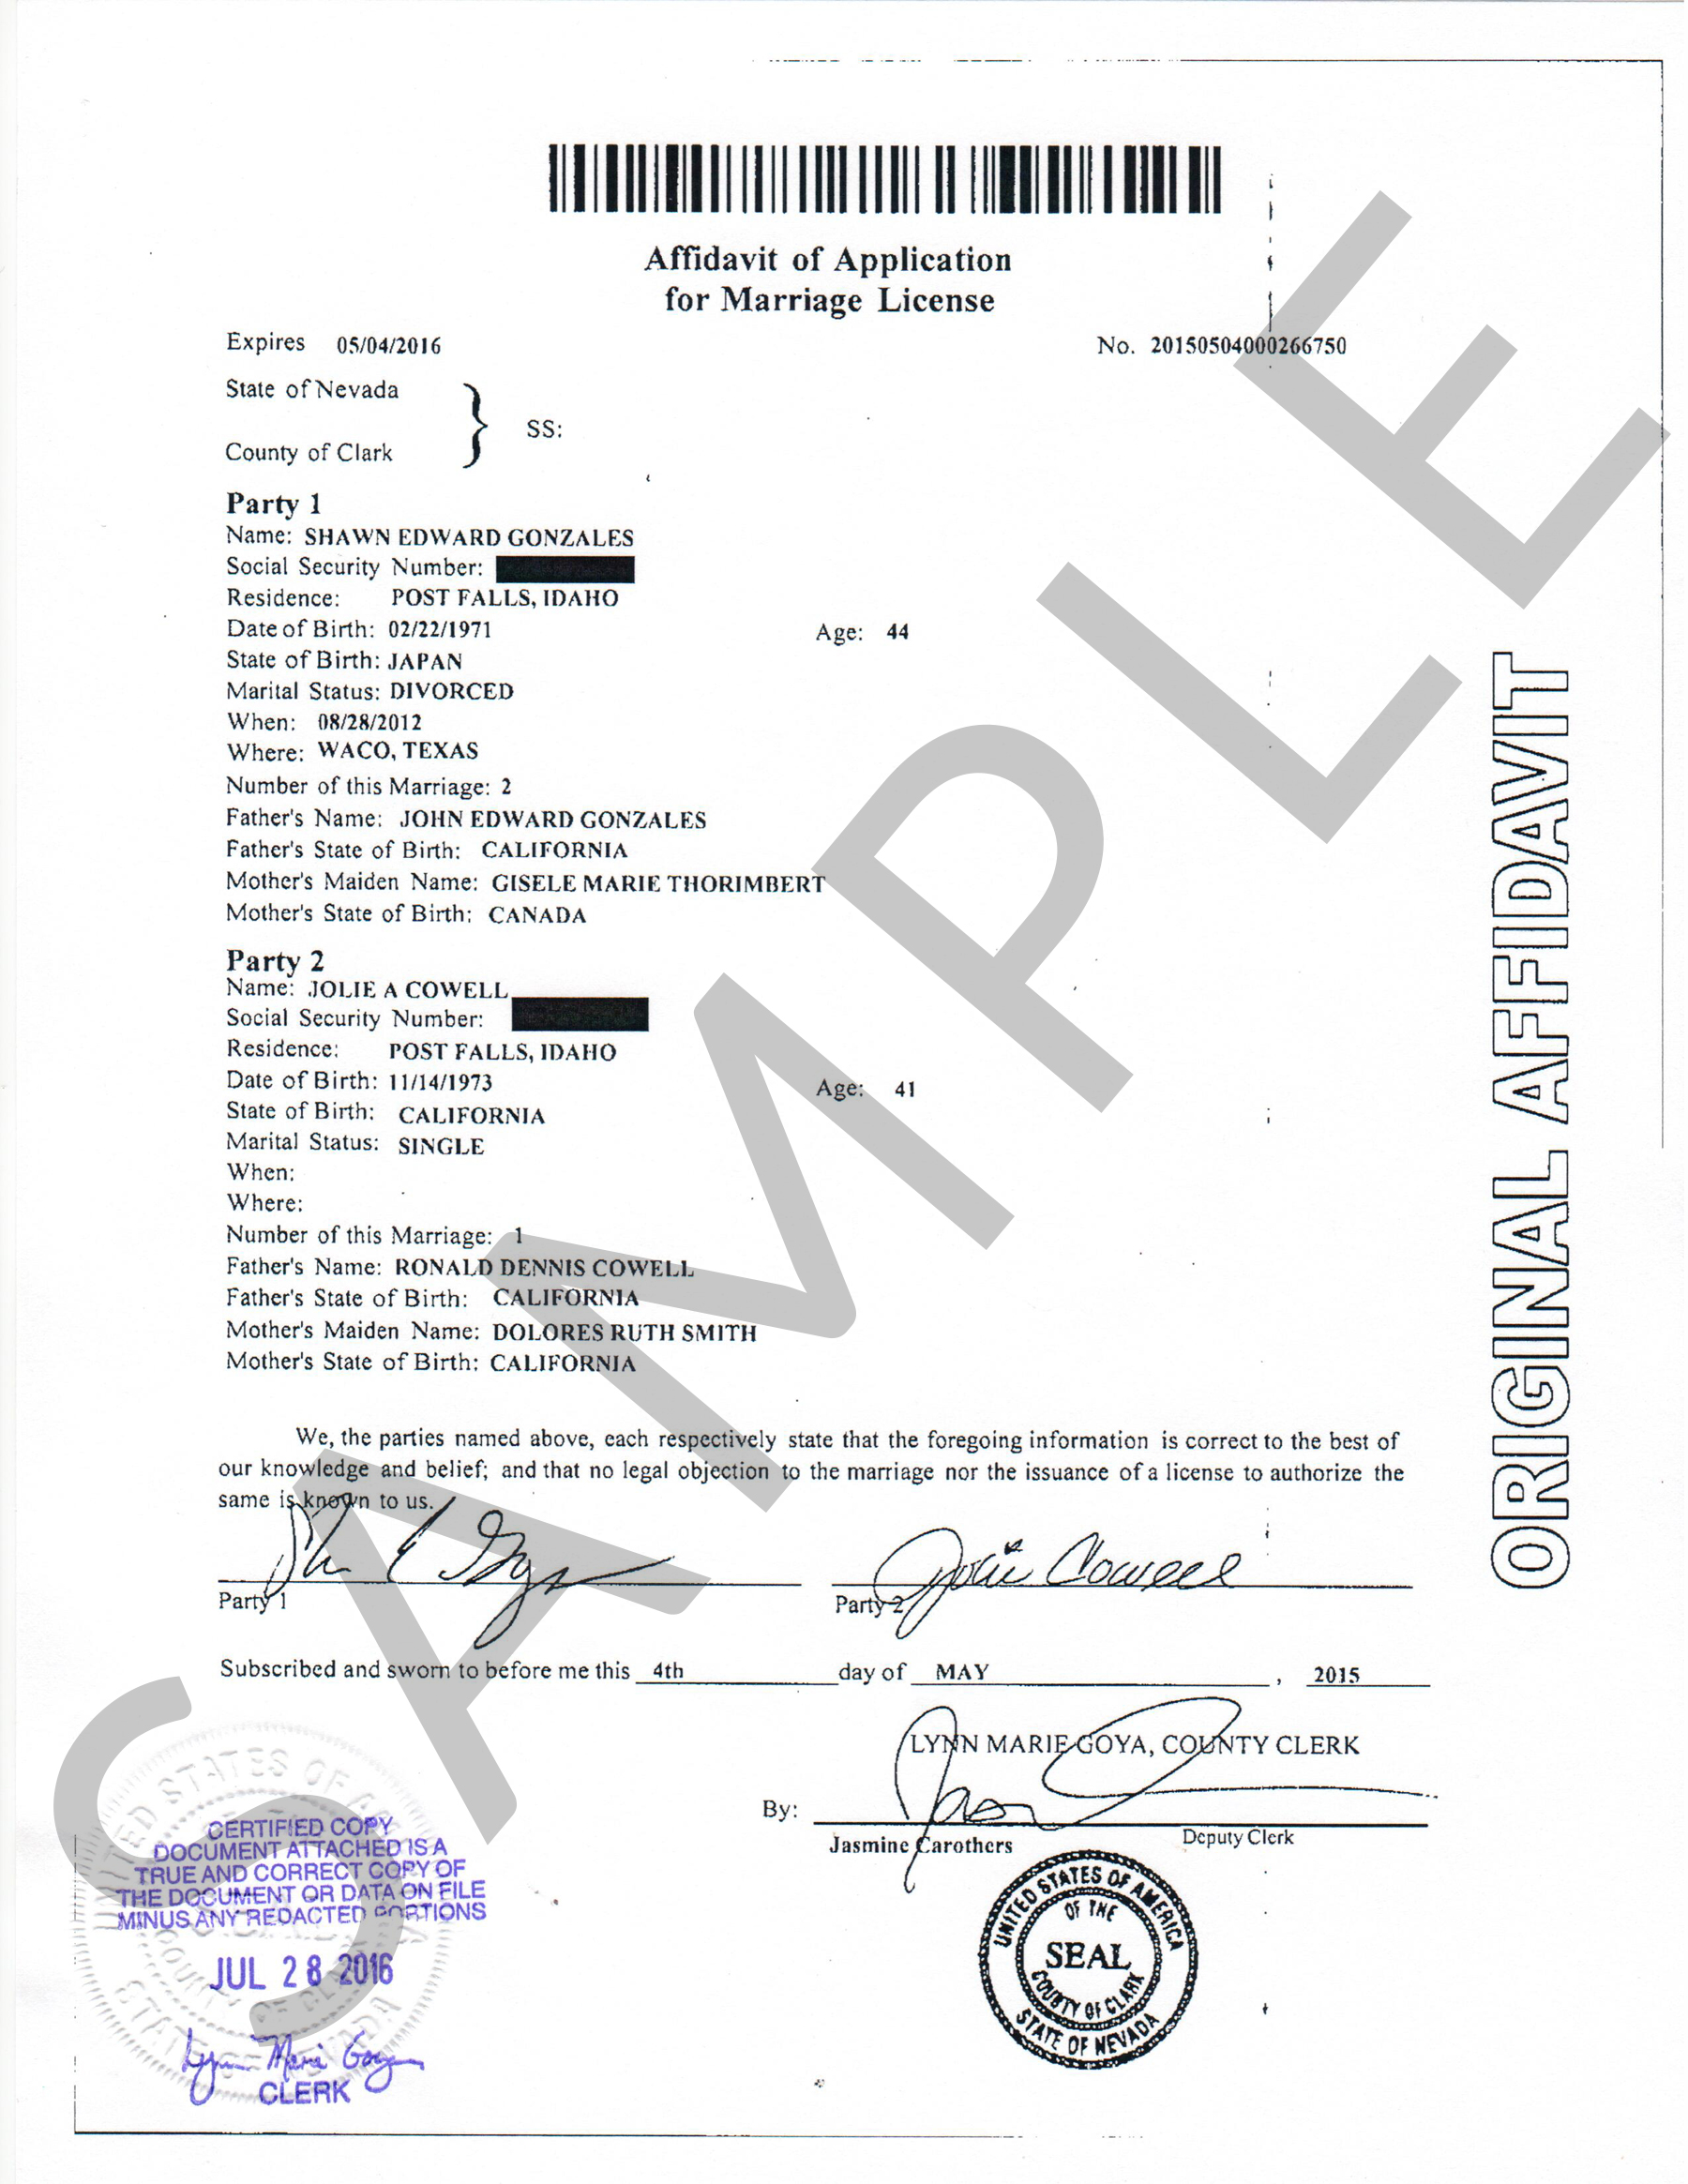 Sample Certificates | Nevada Document Retrieval Service